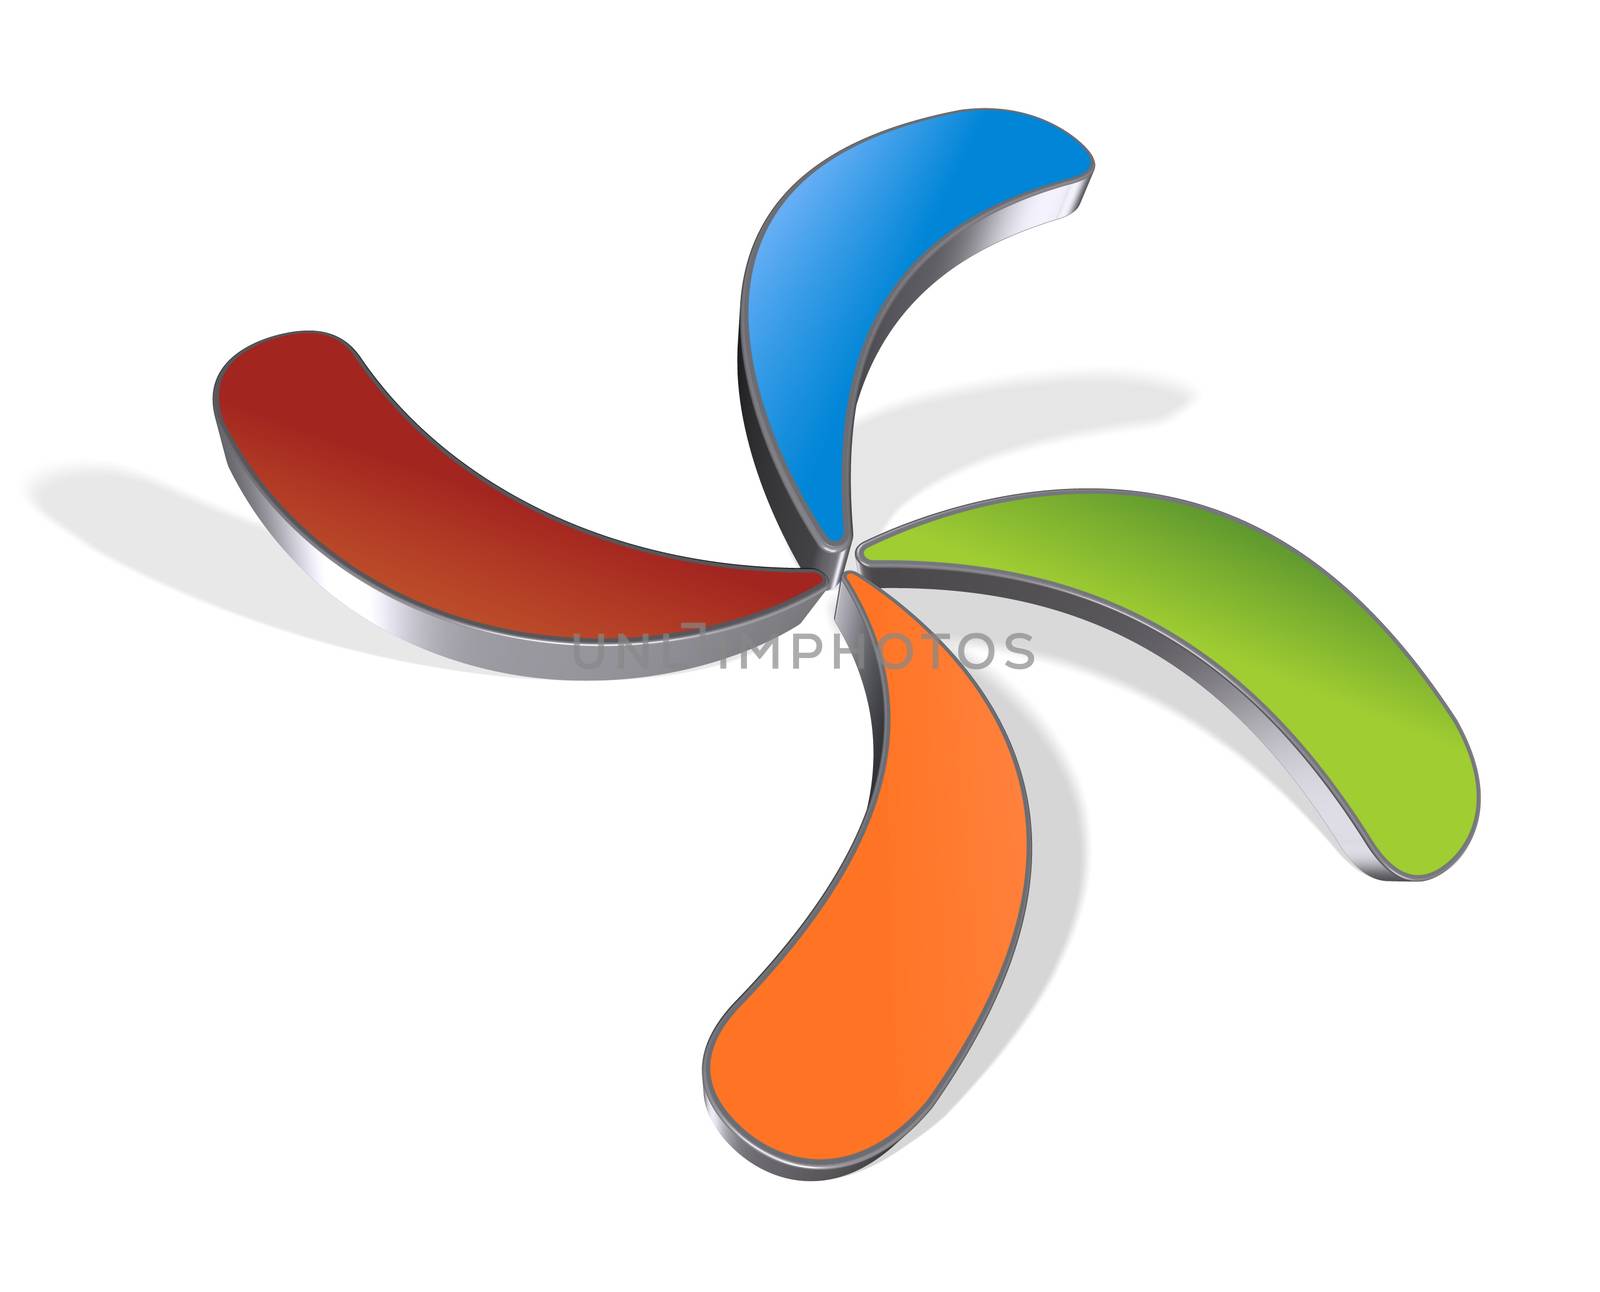  Abstarct logo branding design by stelian